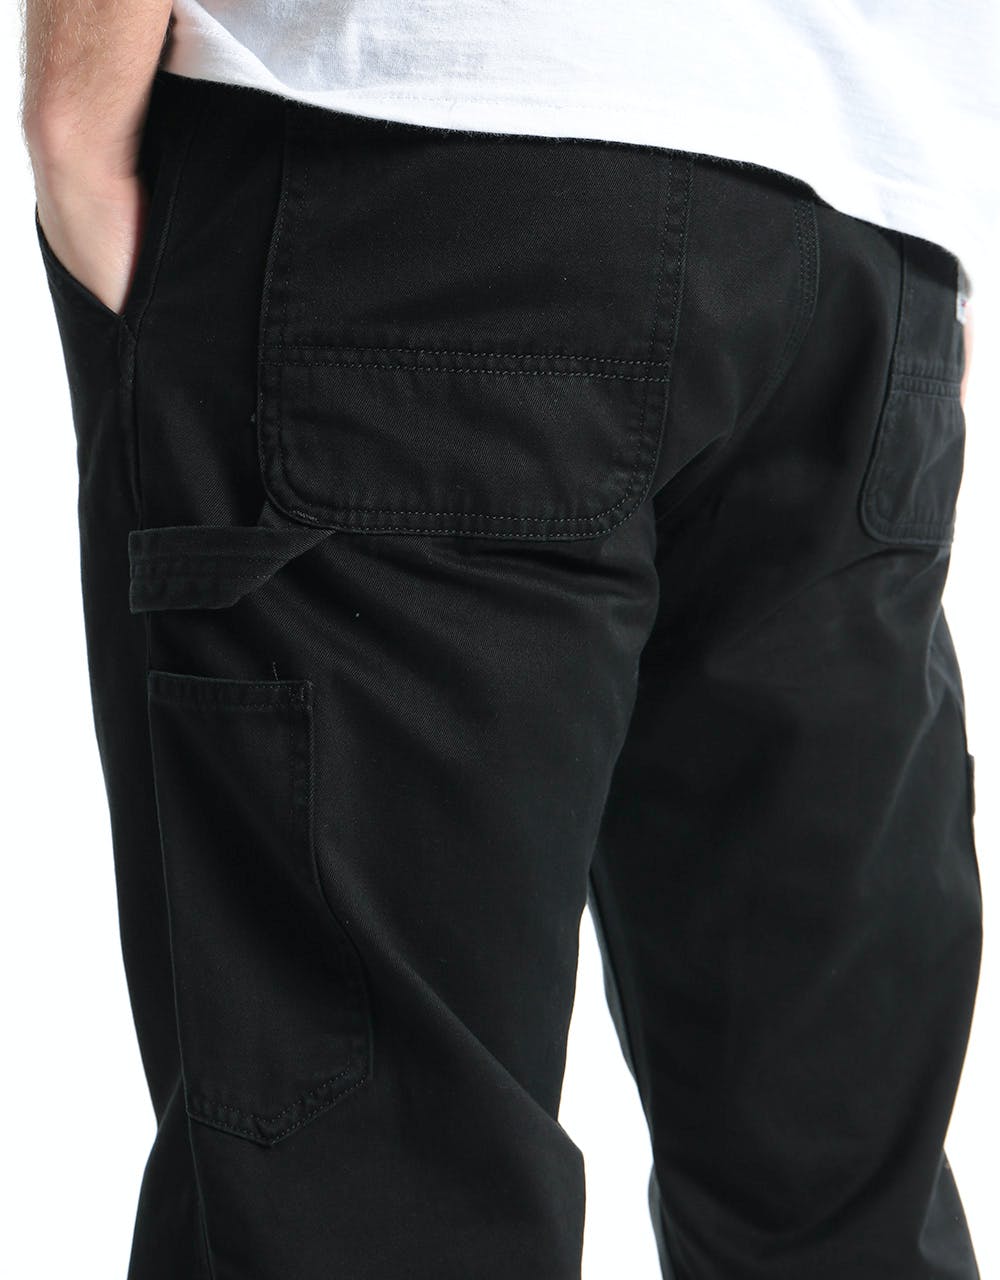 Carhartt WIP Ruck Single Knee Pant - Black (Stone Washed)